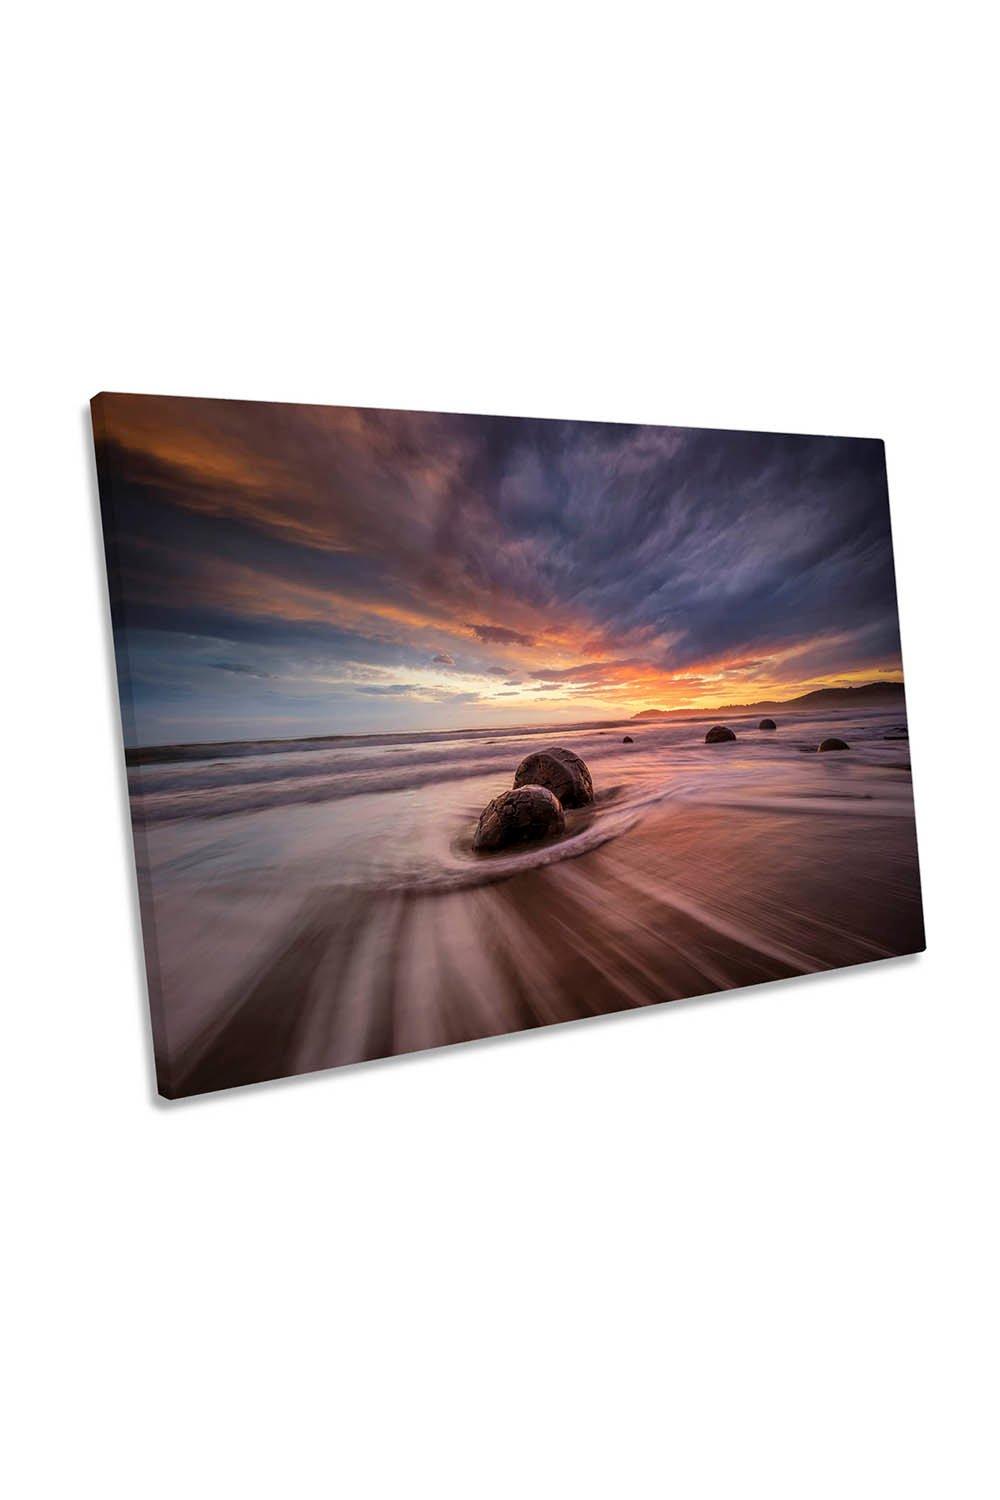 Moeraki Boulders Sunset Beach Canvas Wall Art Picture Print